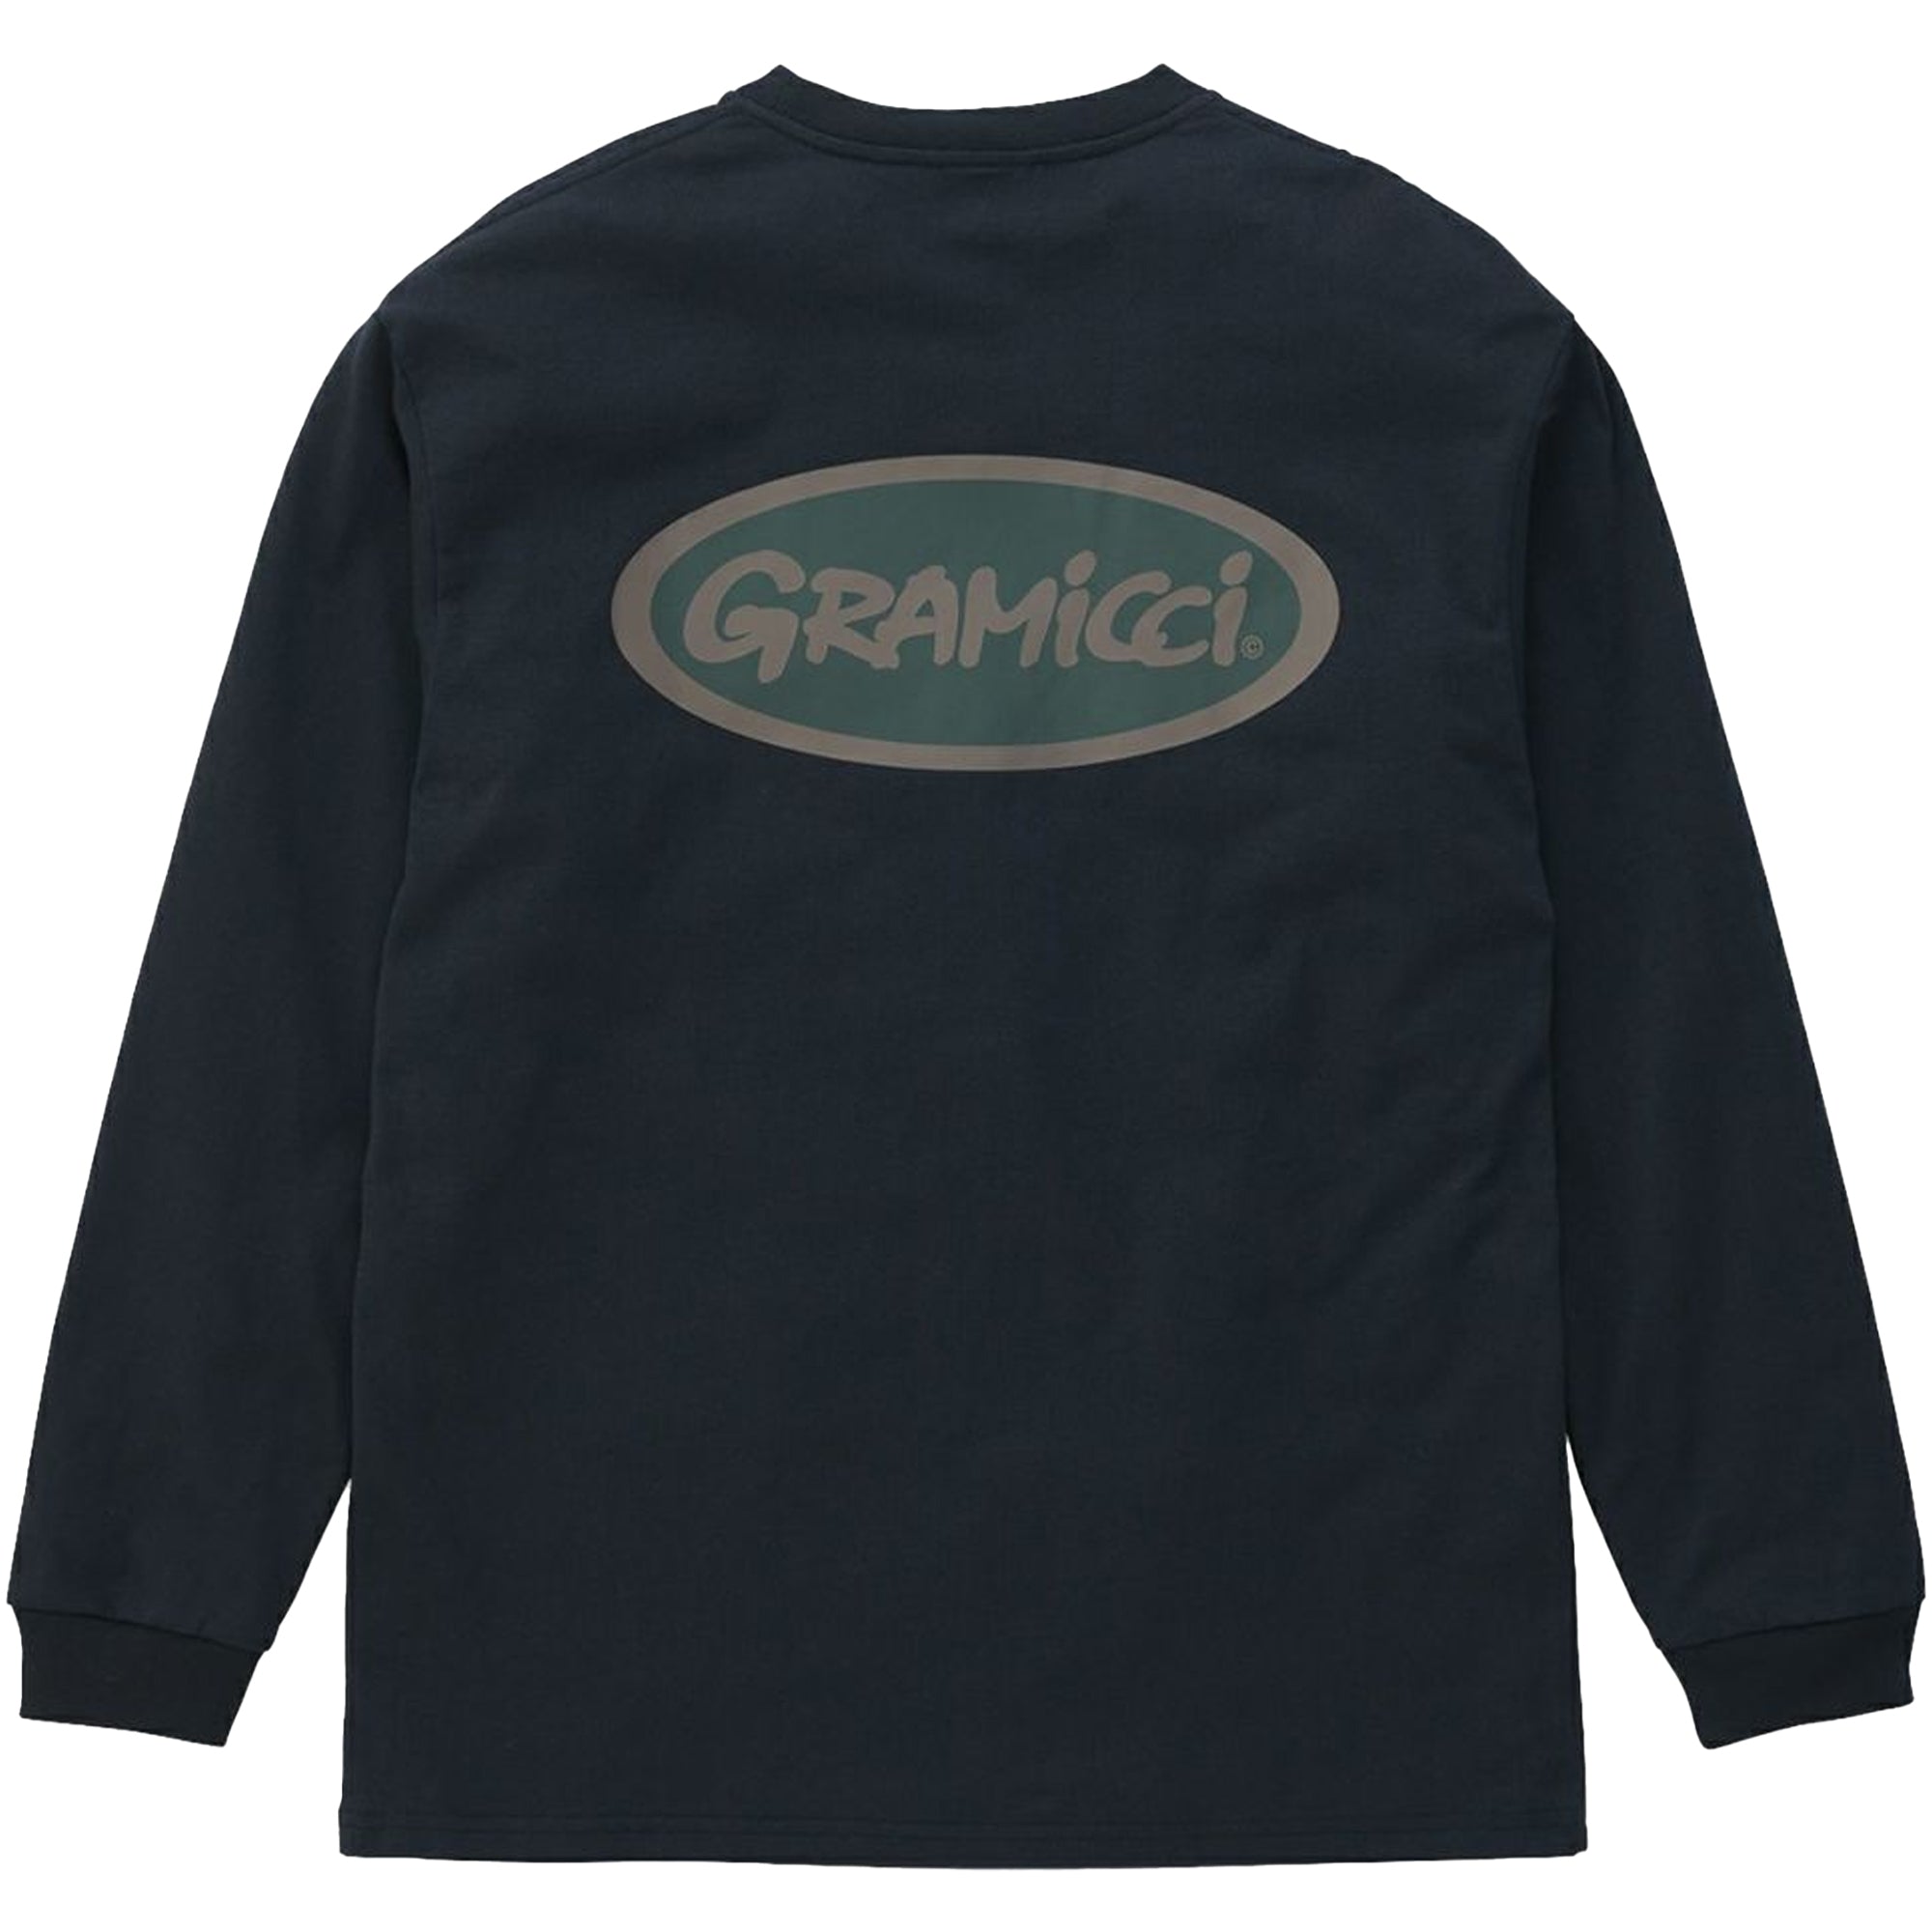 Gramicci Oval Long Sleeve T-Shirt - Vintage Black